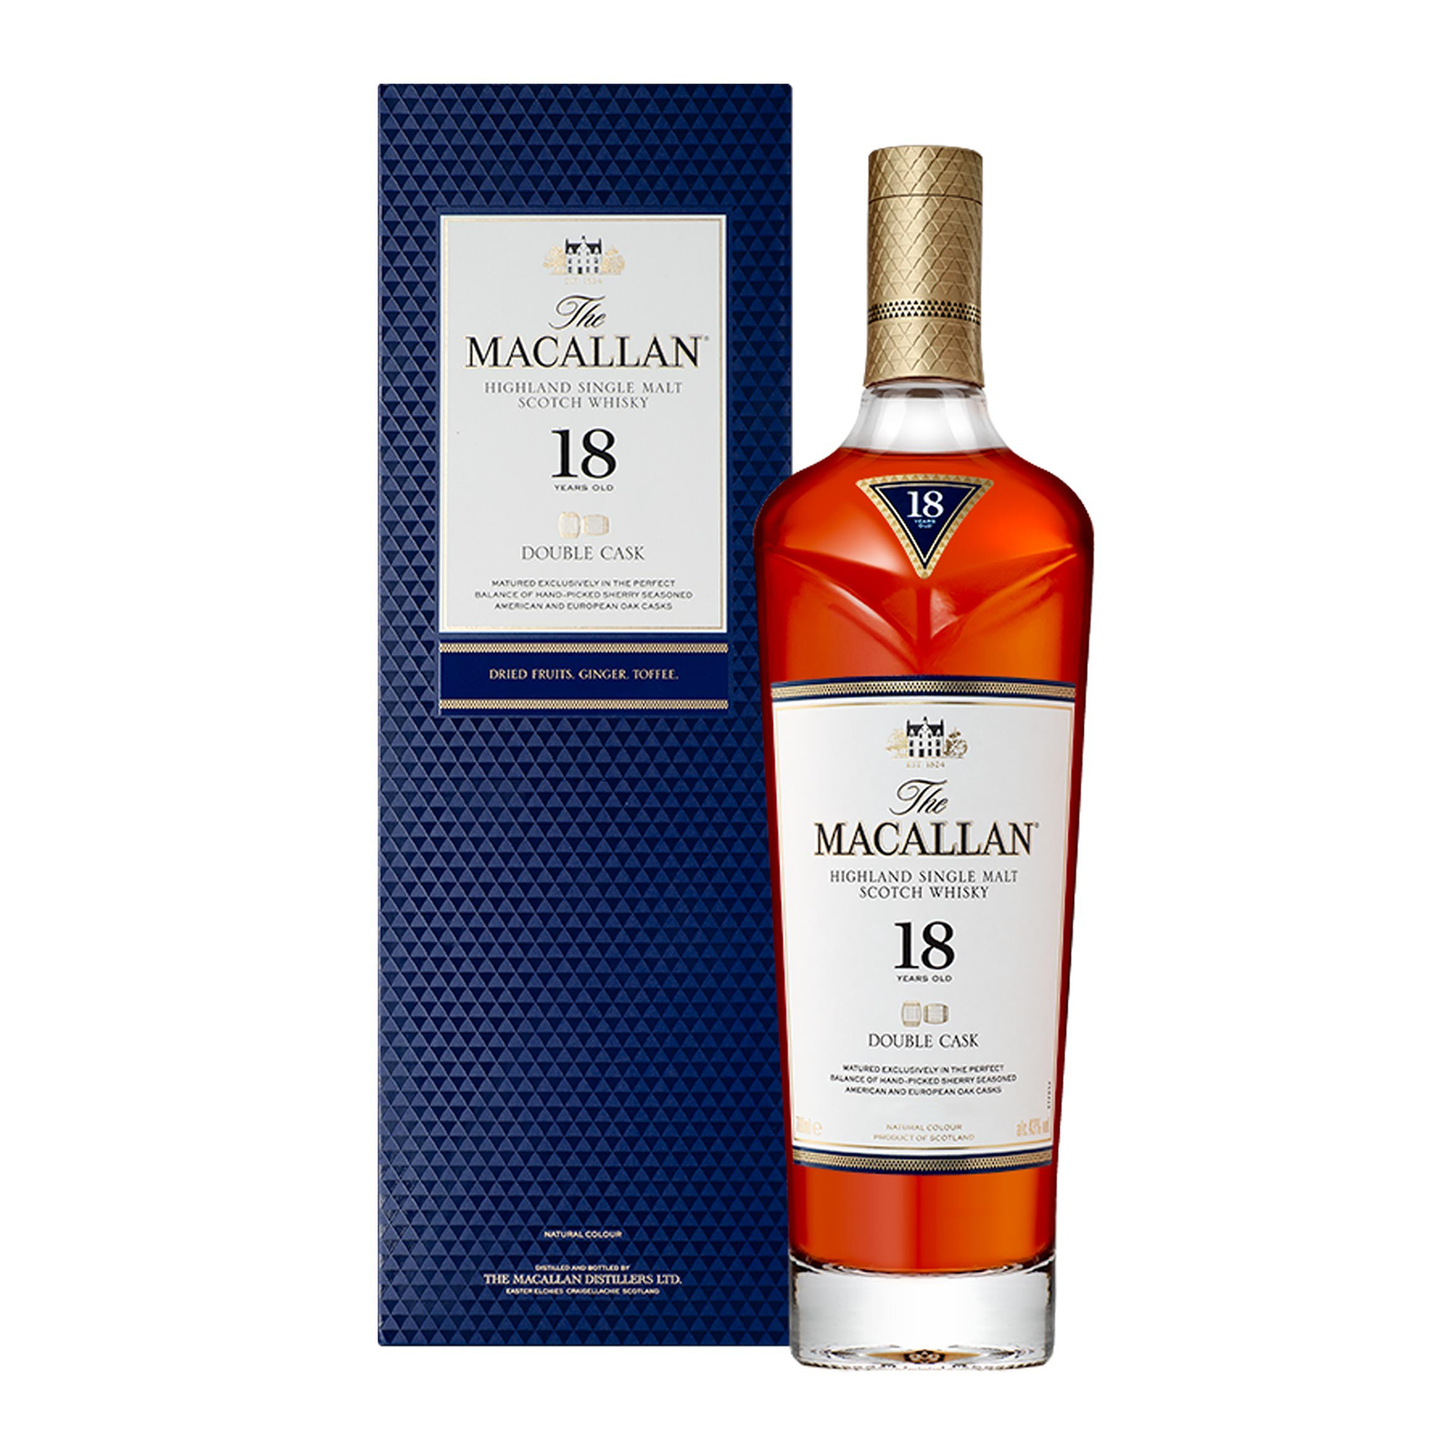 The Macallan Double Cask 18 Year Old Single Malt Scotch Whisky 700ml (2021 Release) - CBD Cellars